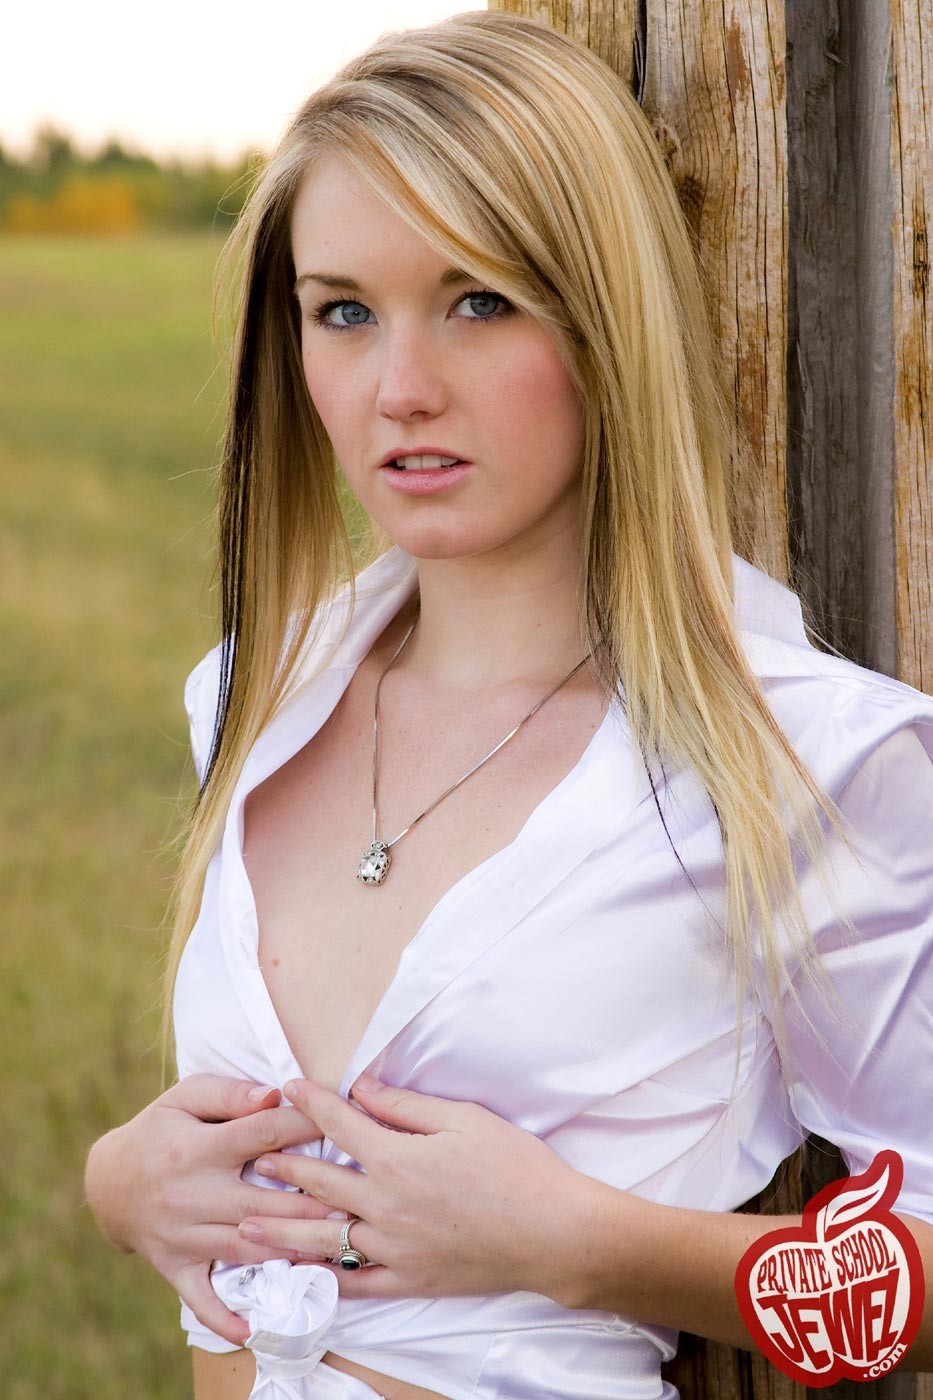 Cute blonde teen girl outdoors at farm #73530782